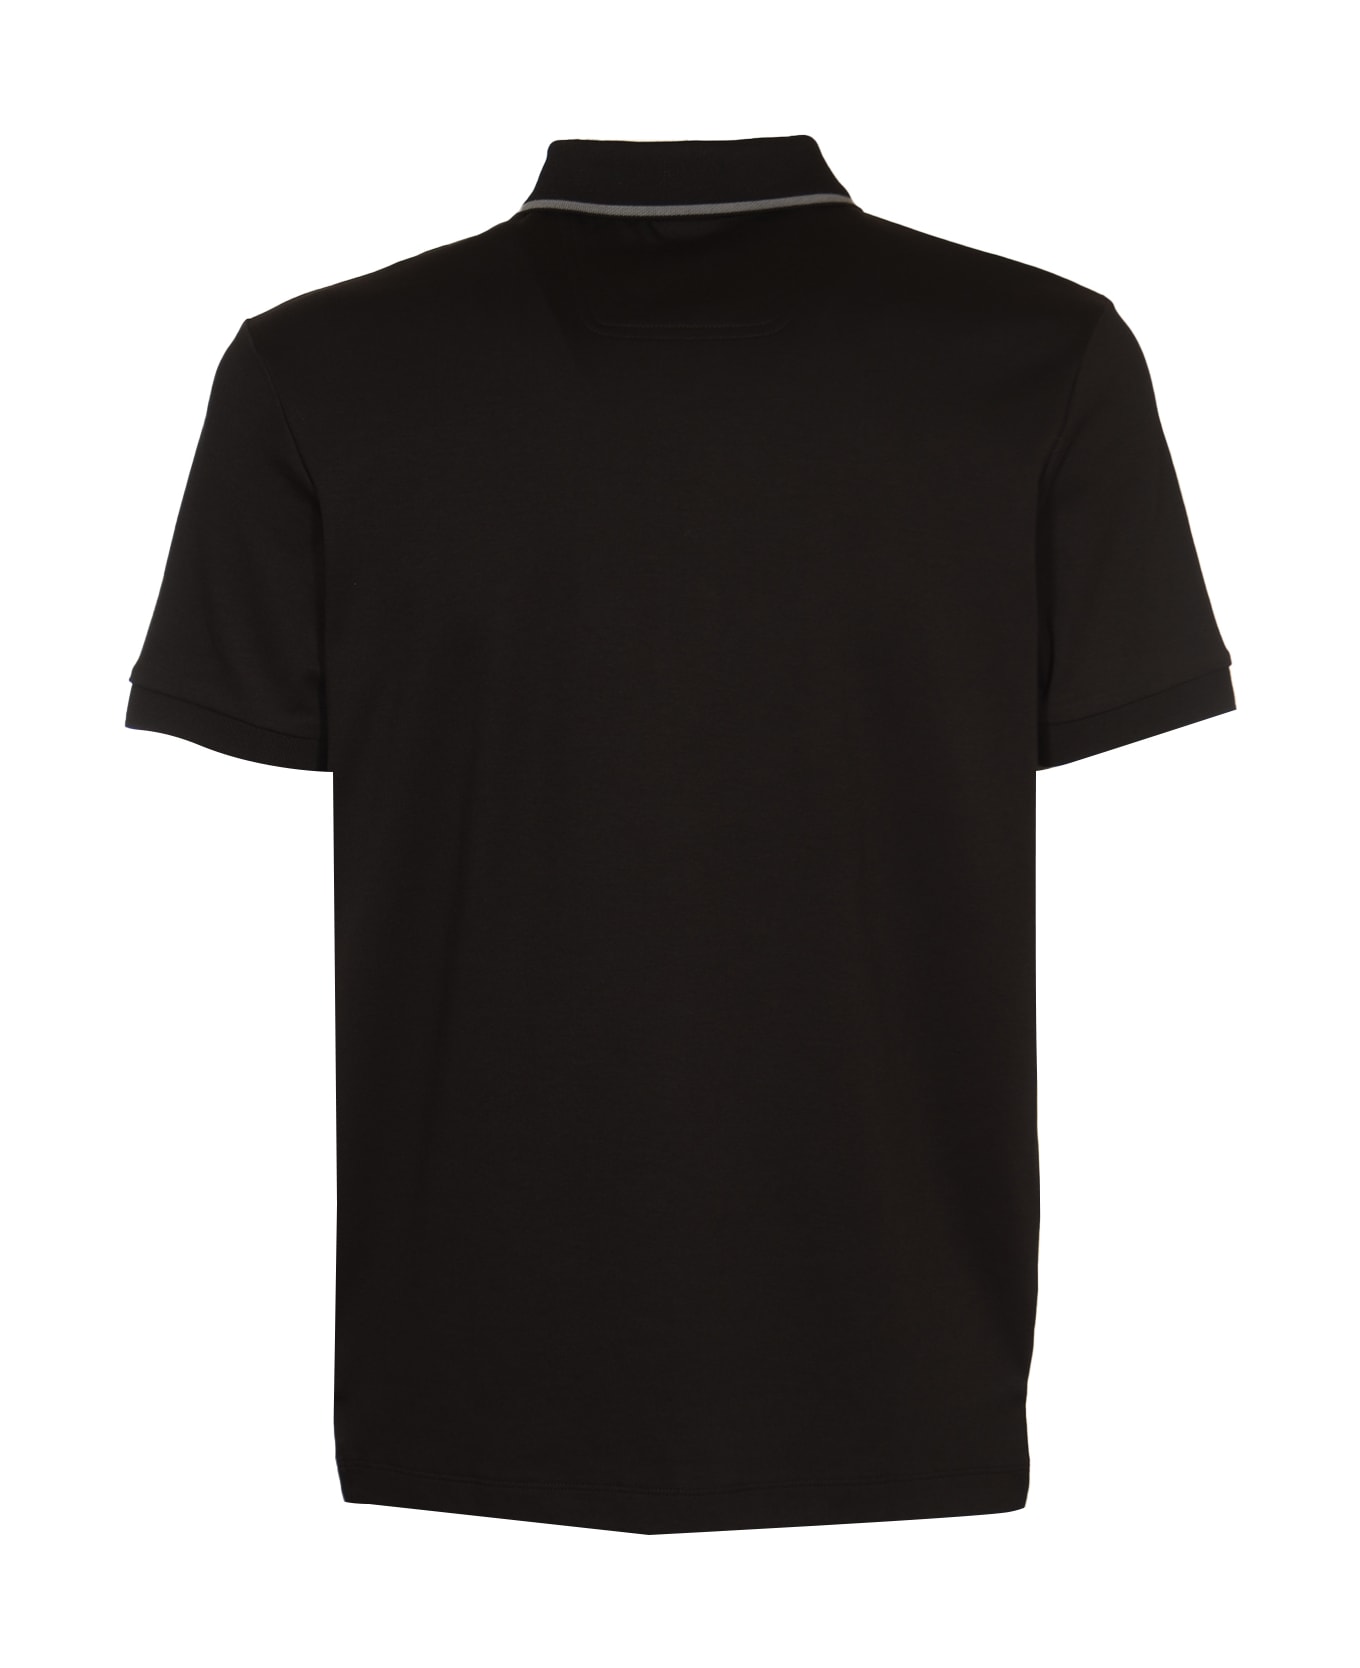 Hugo Boss Logo Polo Shirt - Black